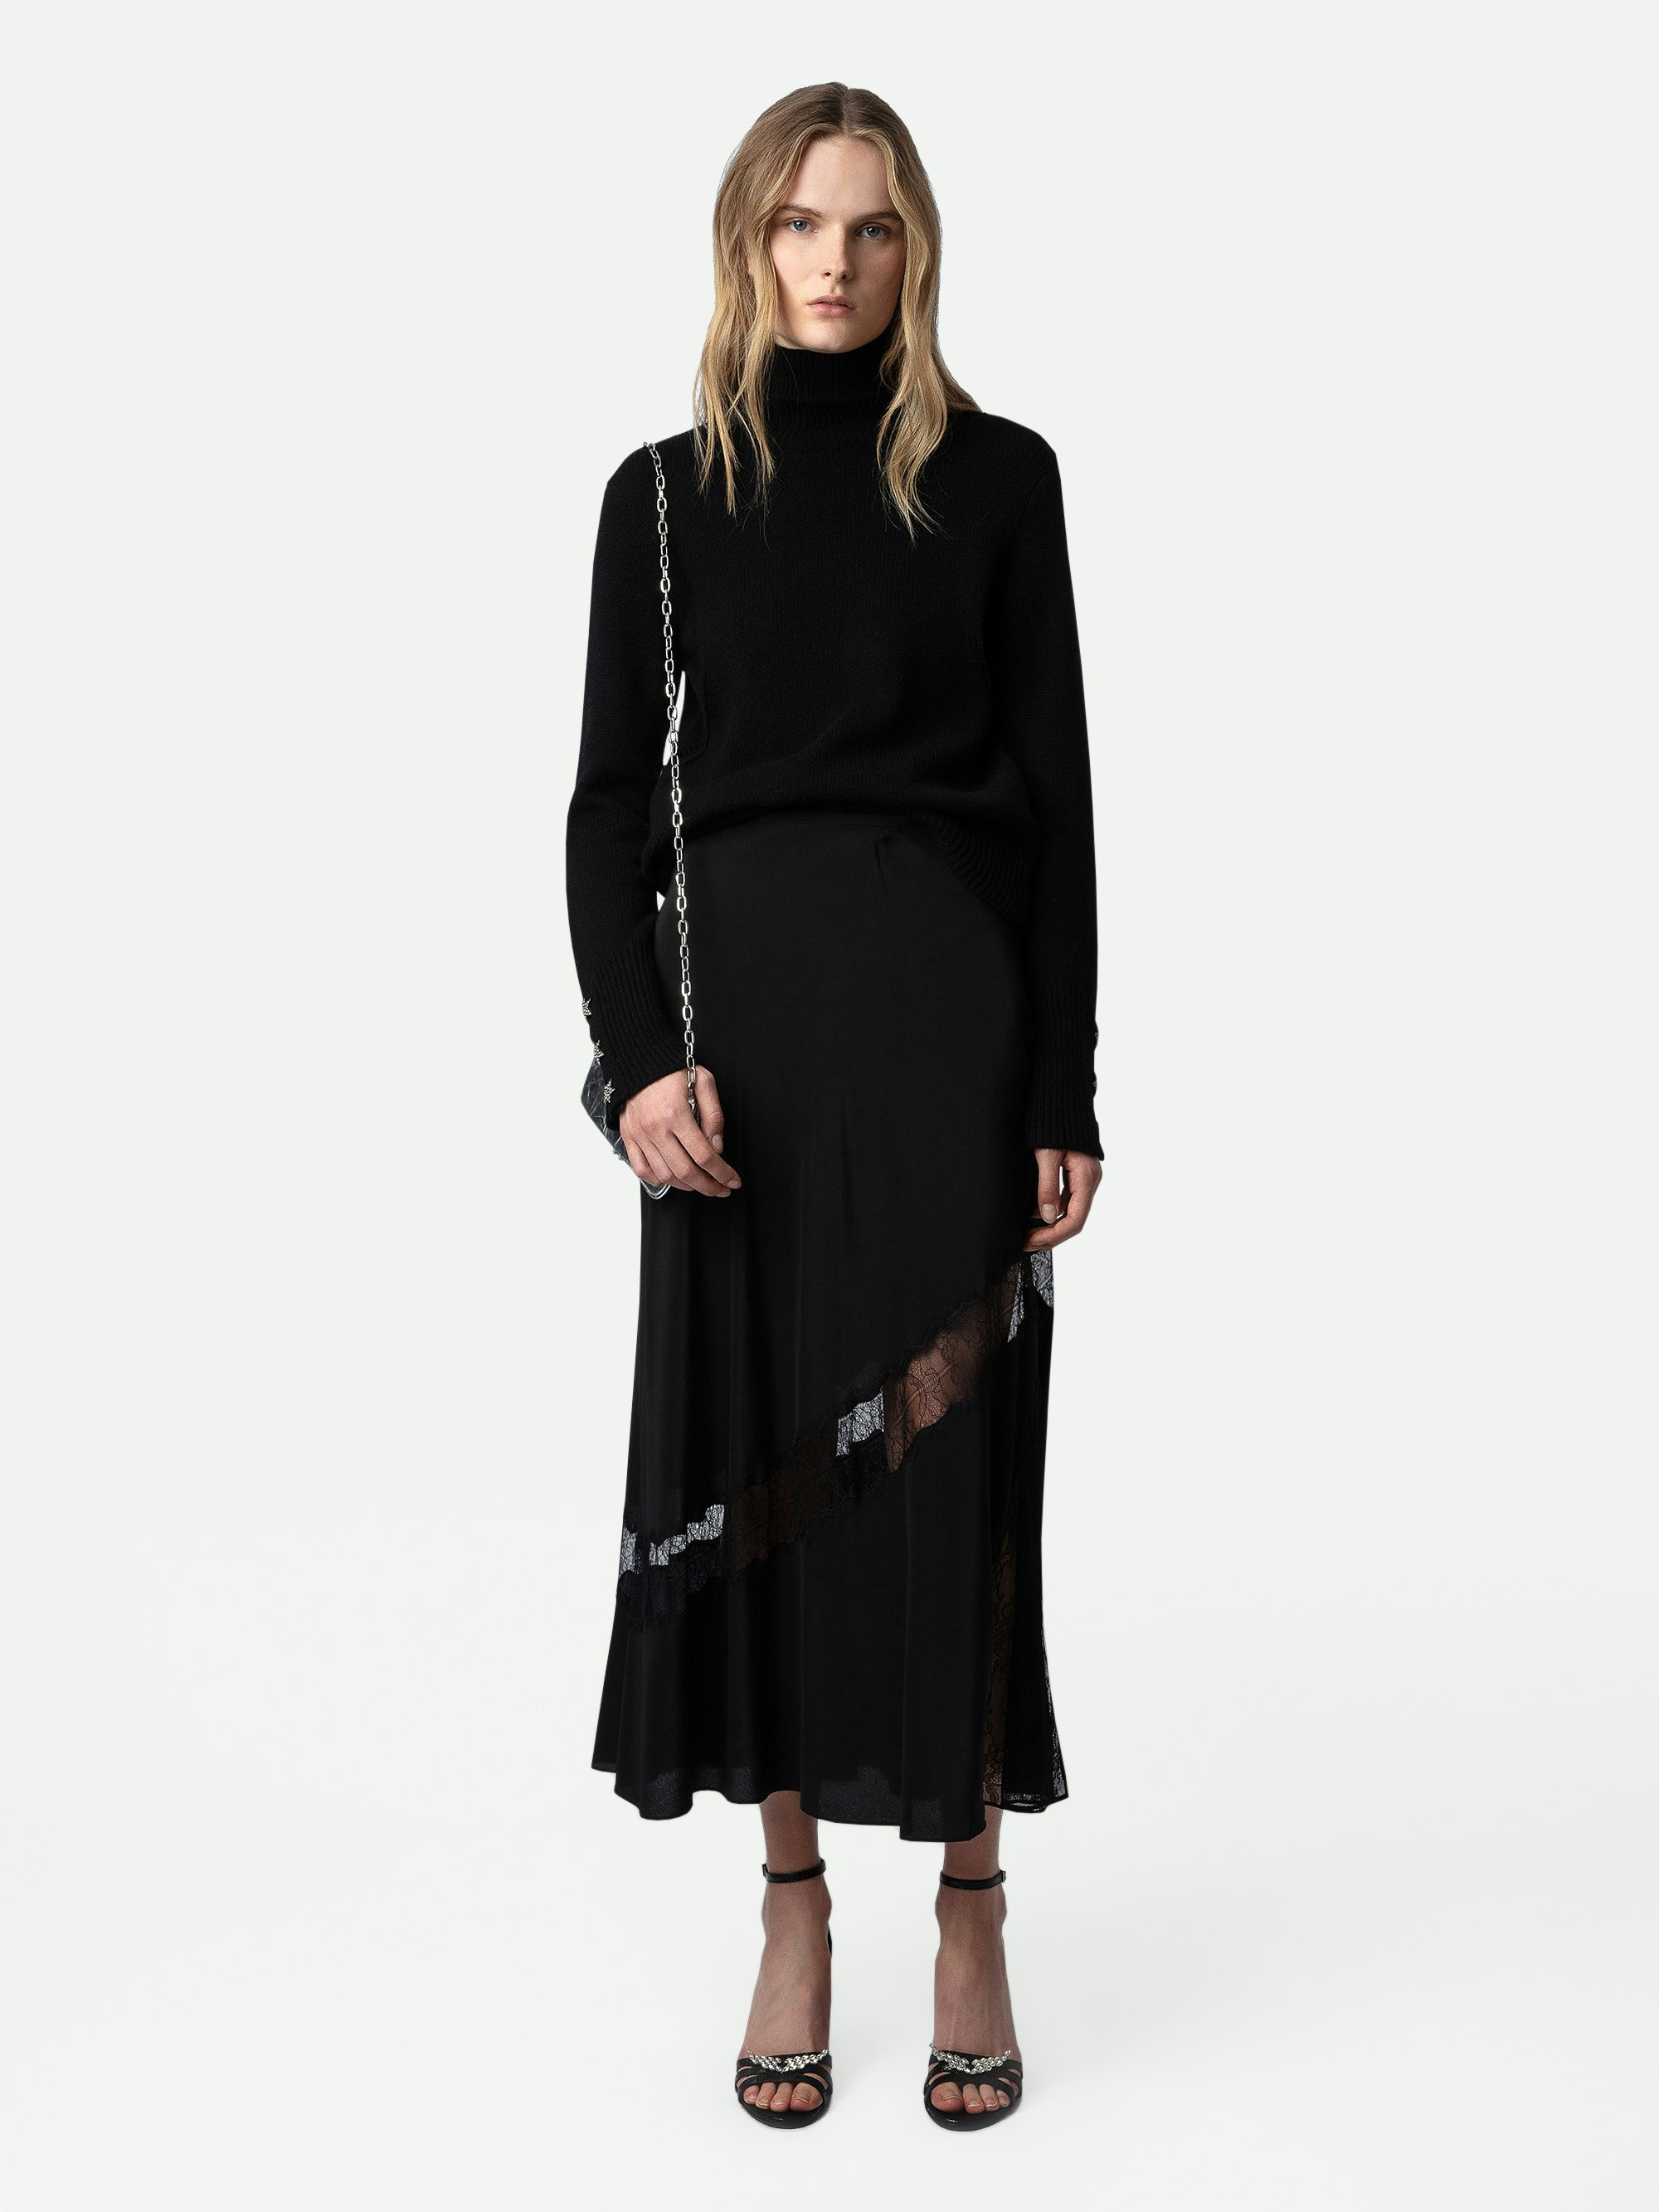 Jaylal Silk Skirt - Women’s black silk midi skirt with zip fastening, splits and lace detailing.